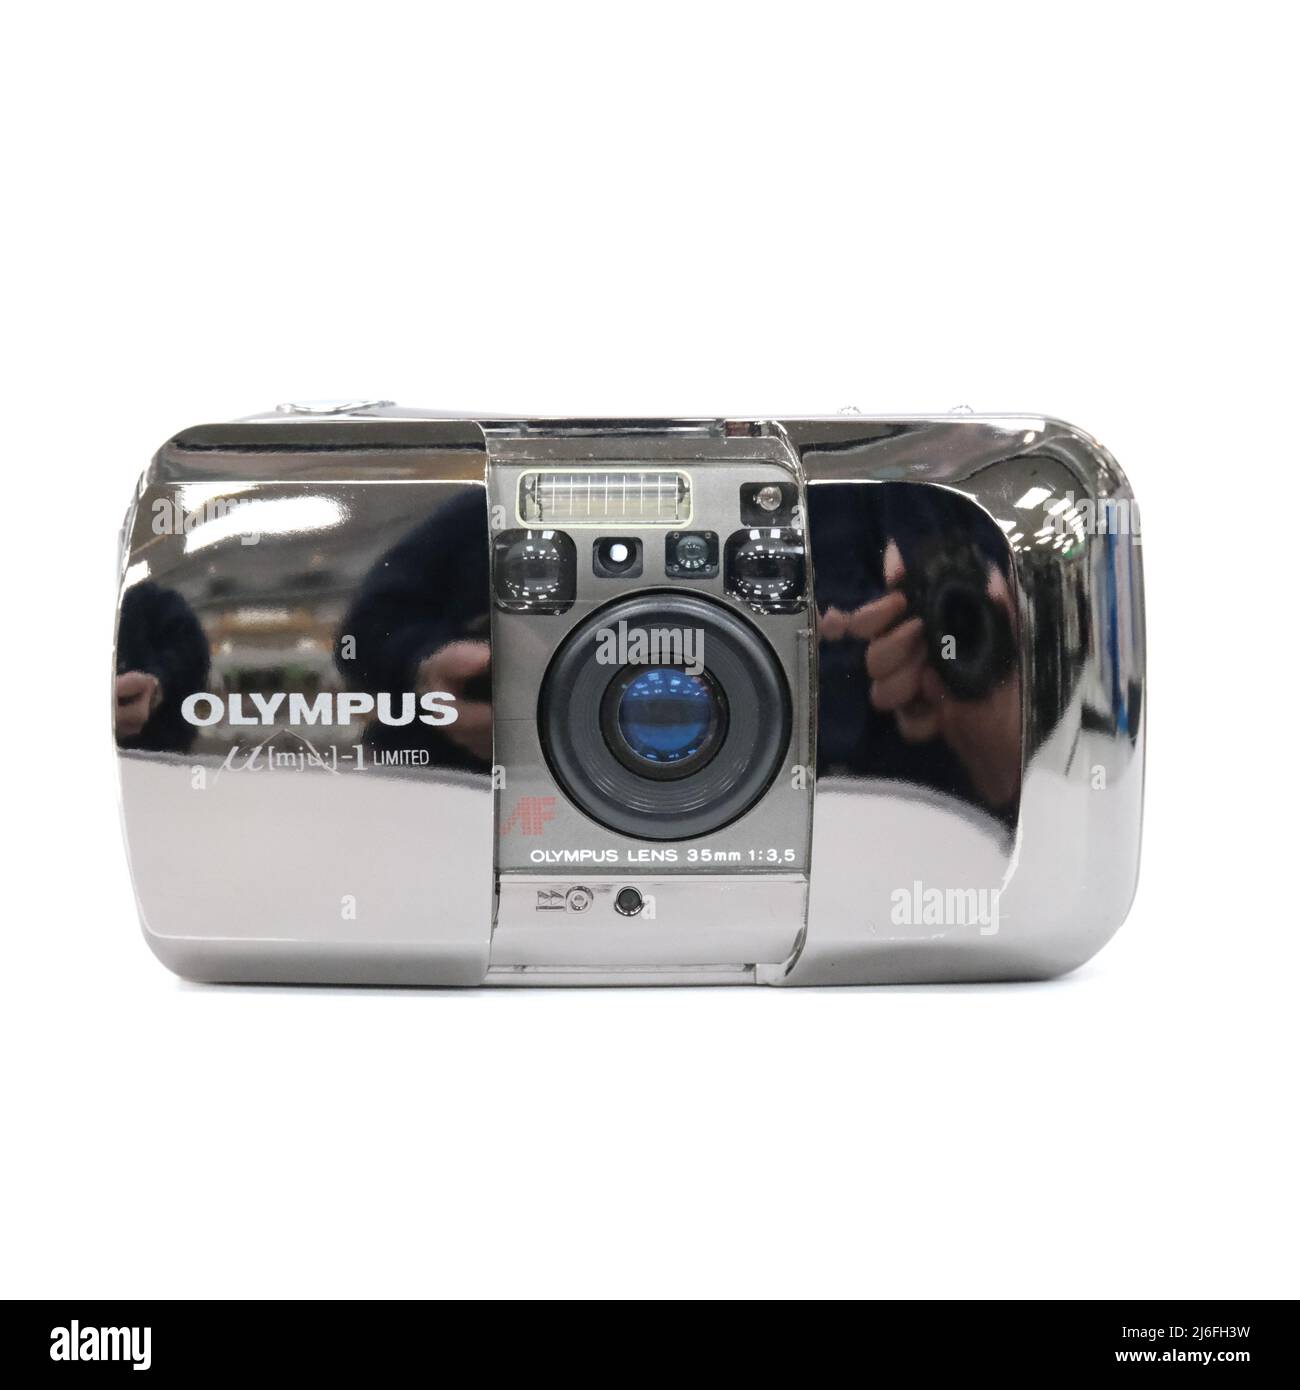 Olympus MJU 1 Limited Edition Stock Photo